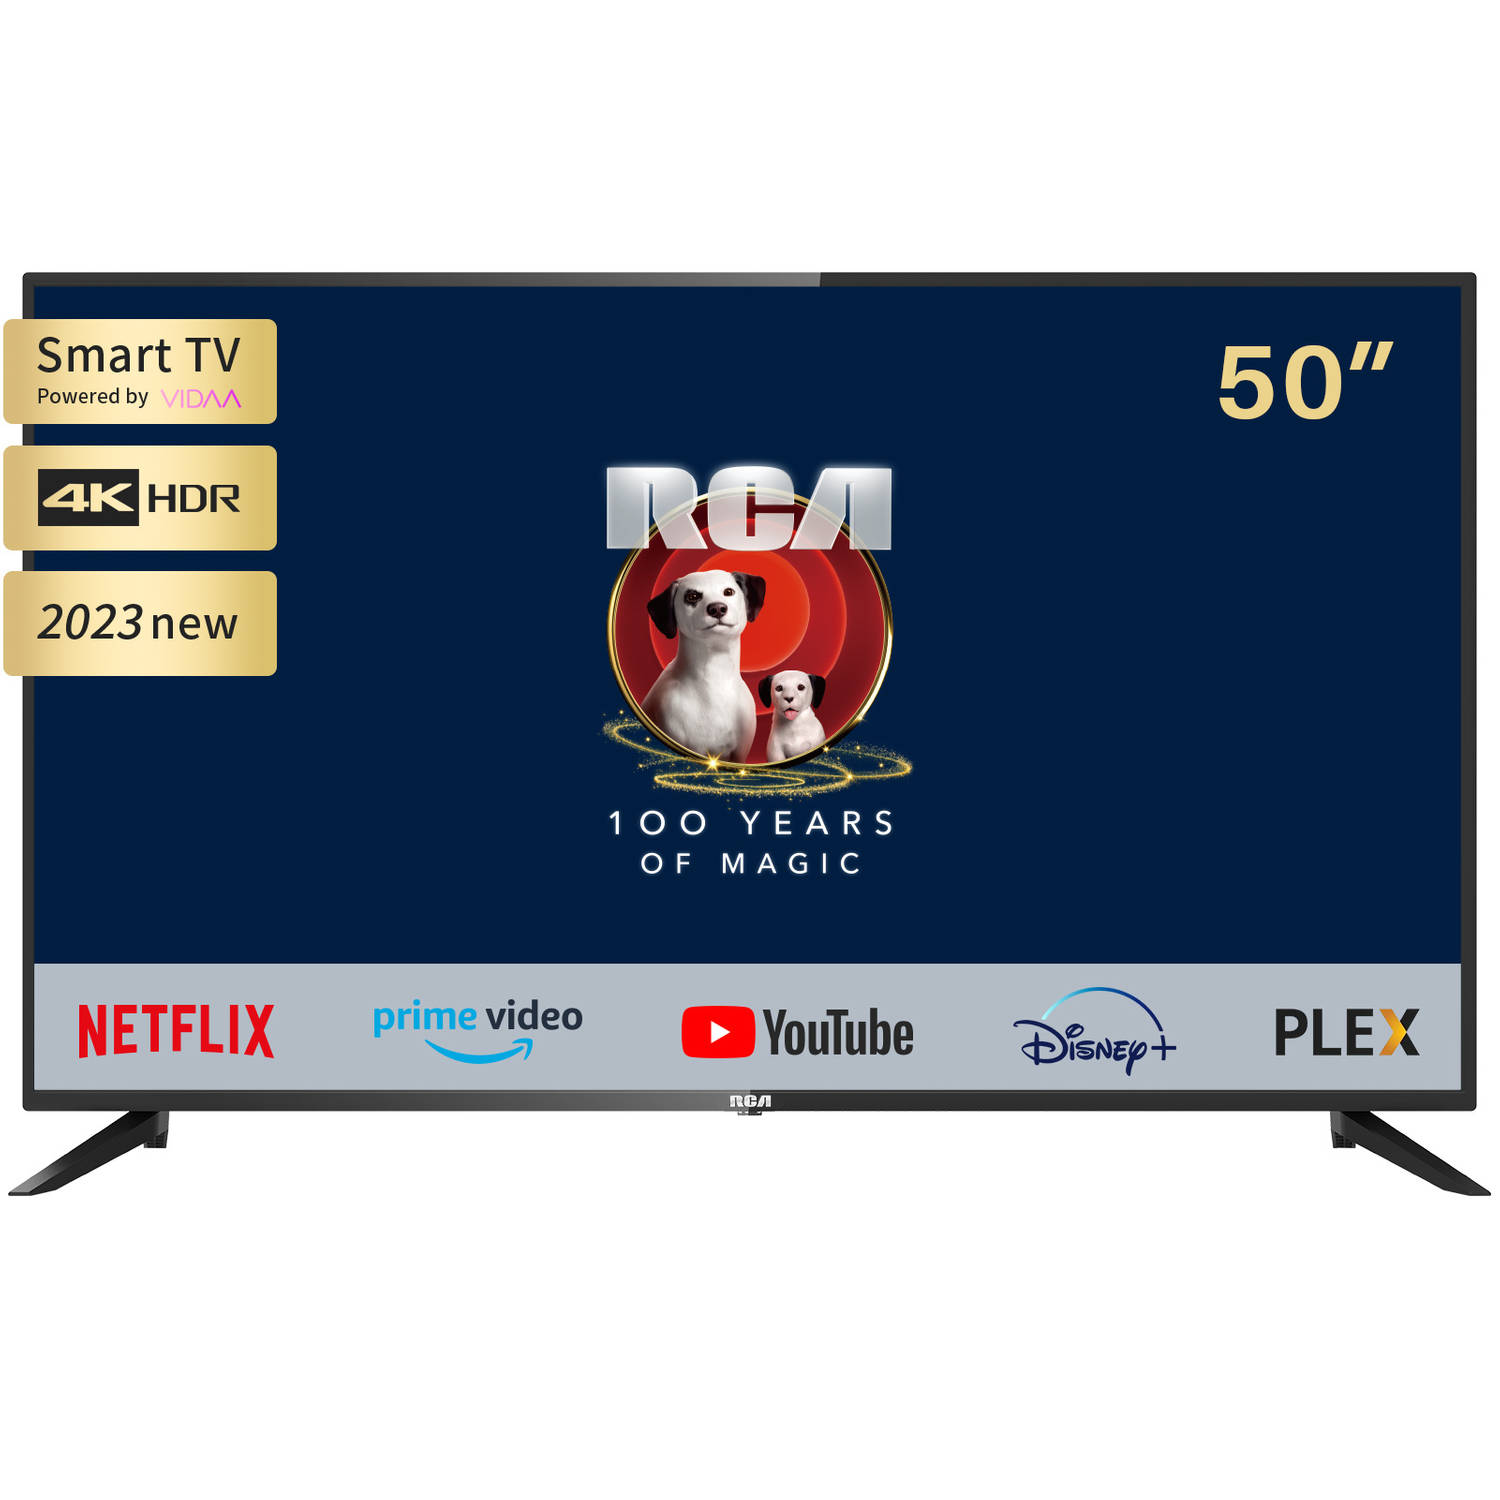 RCA iRV50U3-50 inch-4K HRD -smart TV